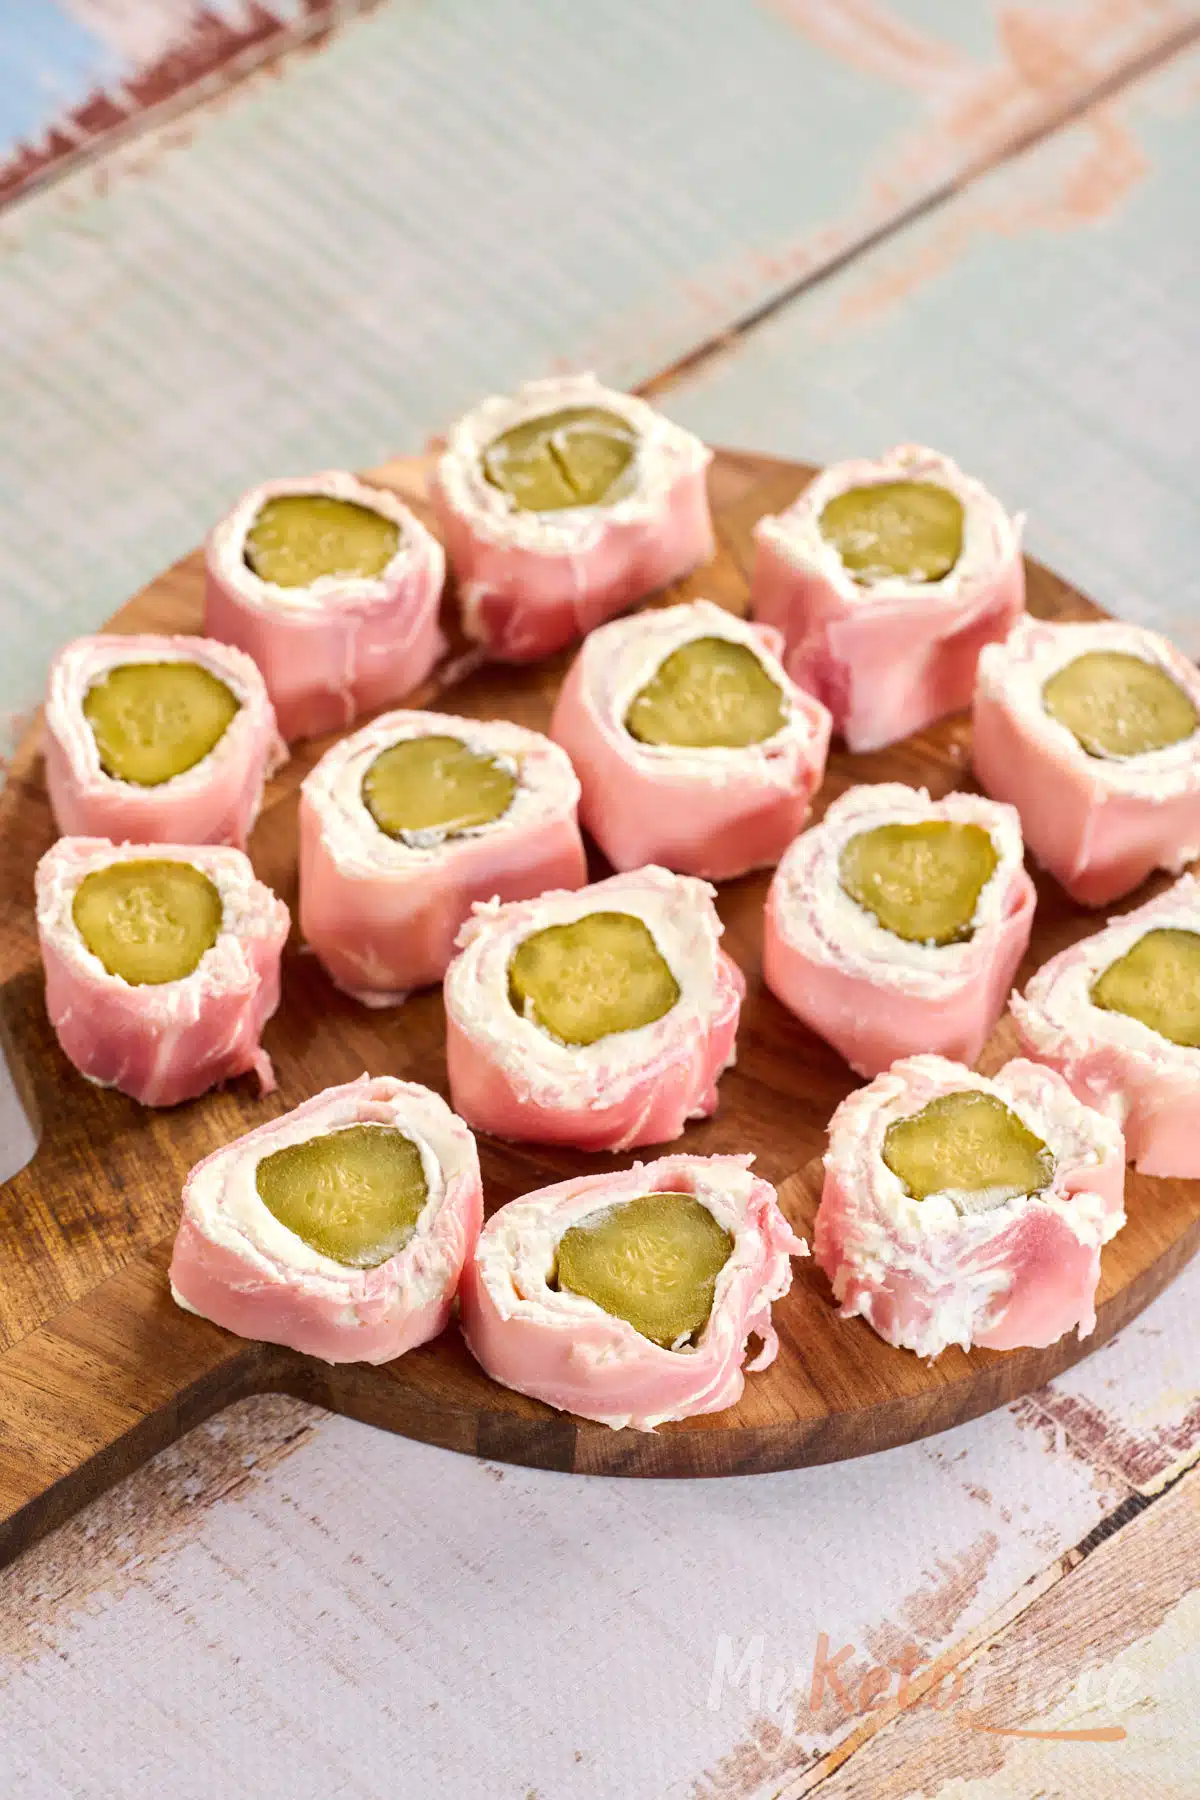 Ham Pickle Roll-Ups